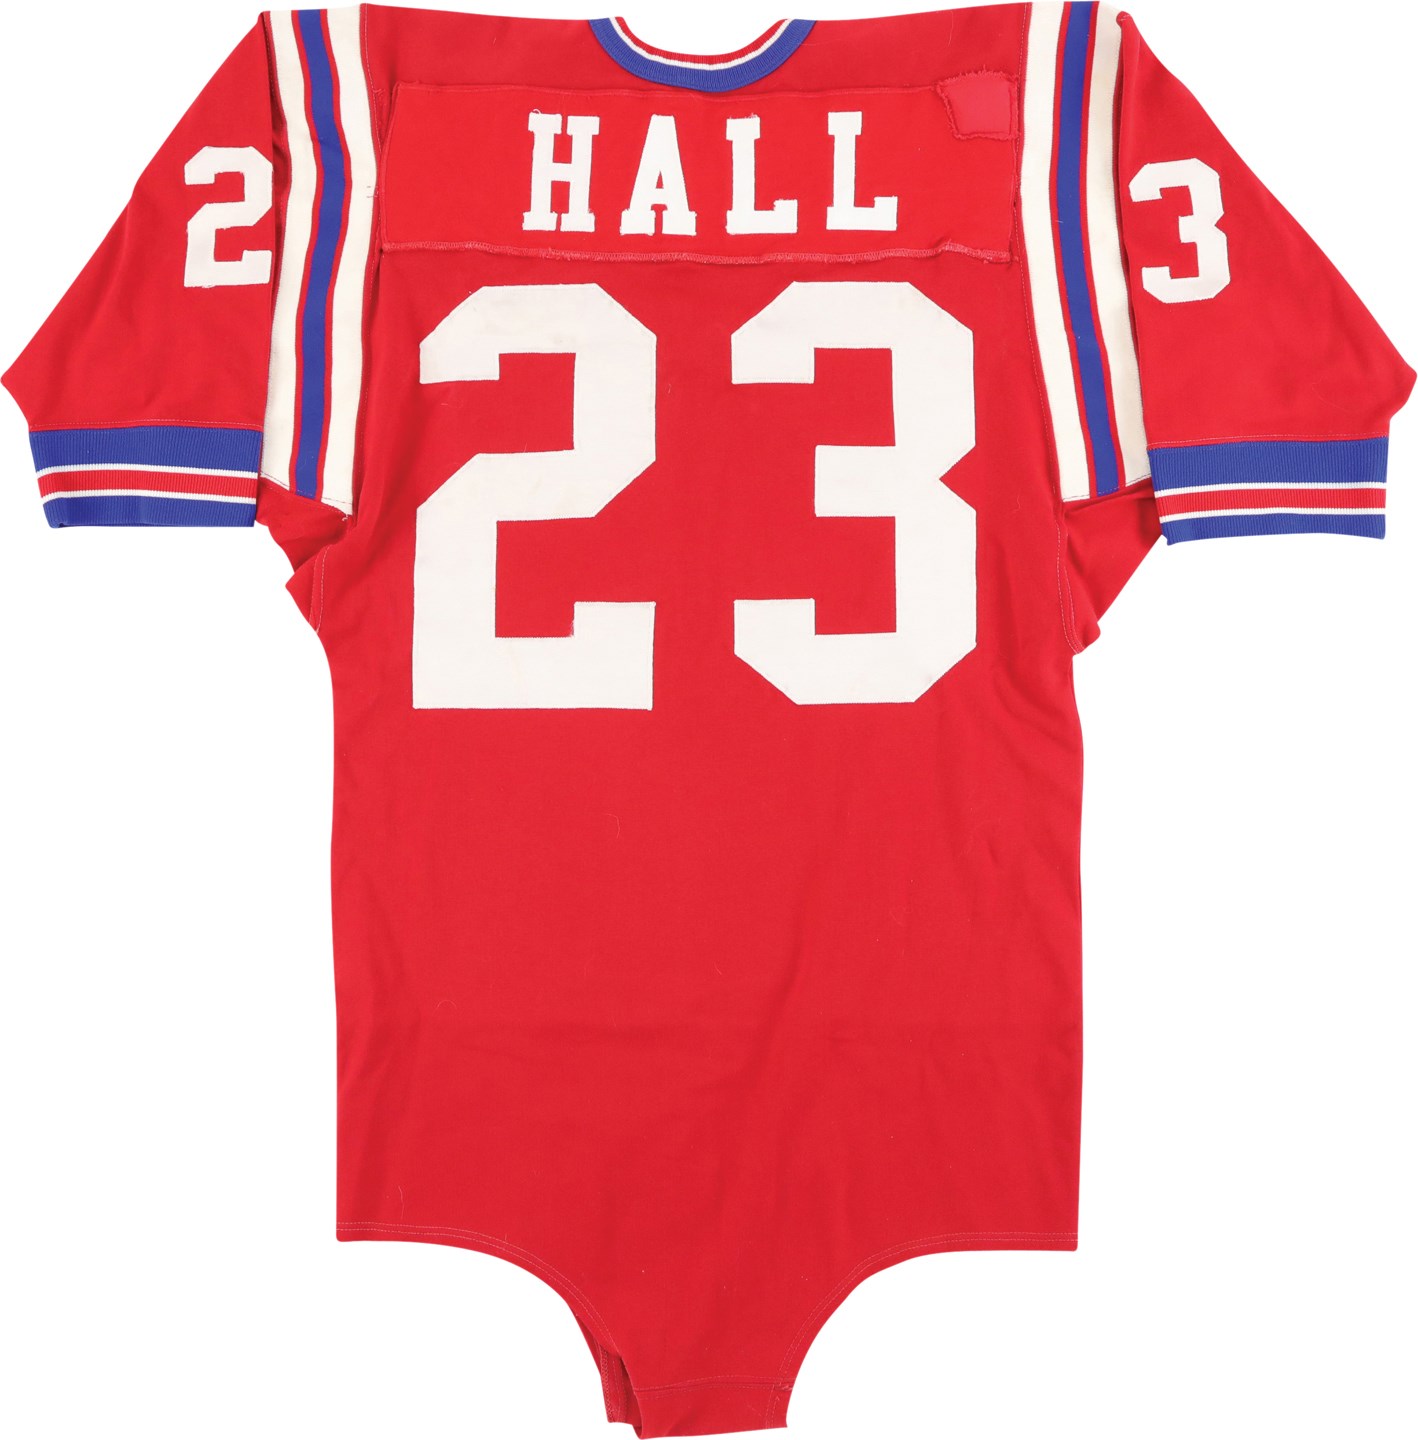 Football - Rare 1967 Ron Hall Boston Patriots Game Worn Jersey (Hall LOA)